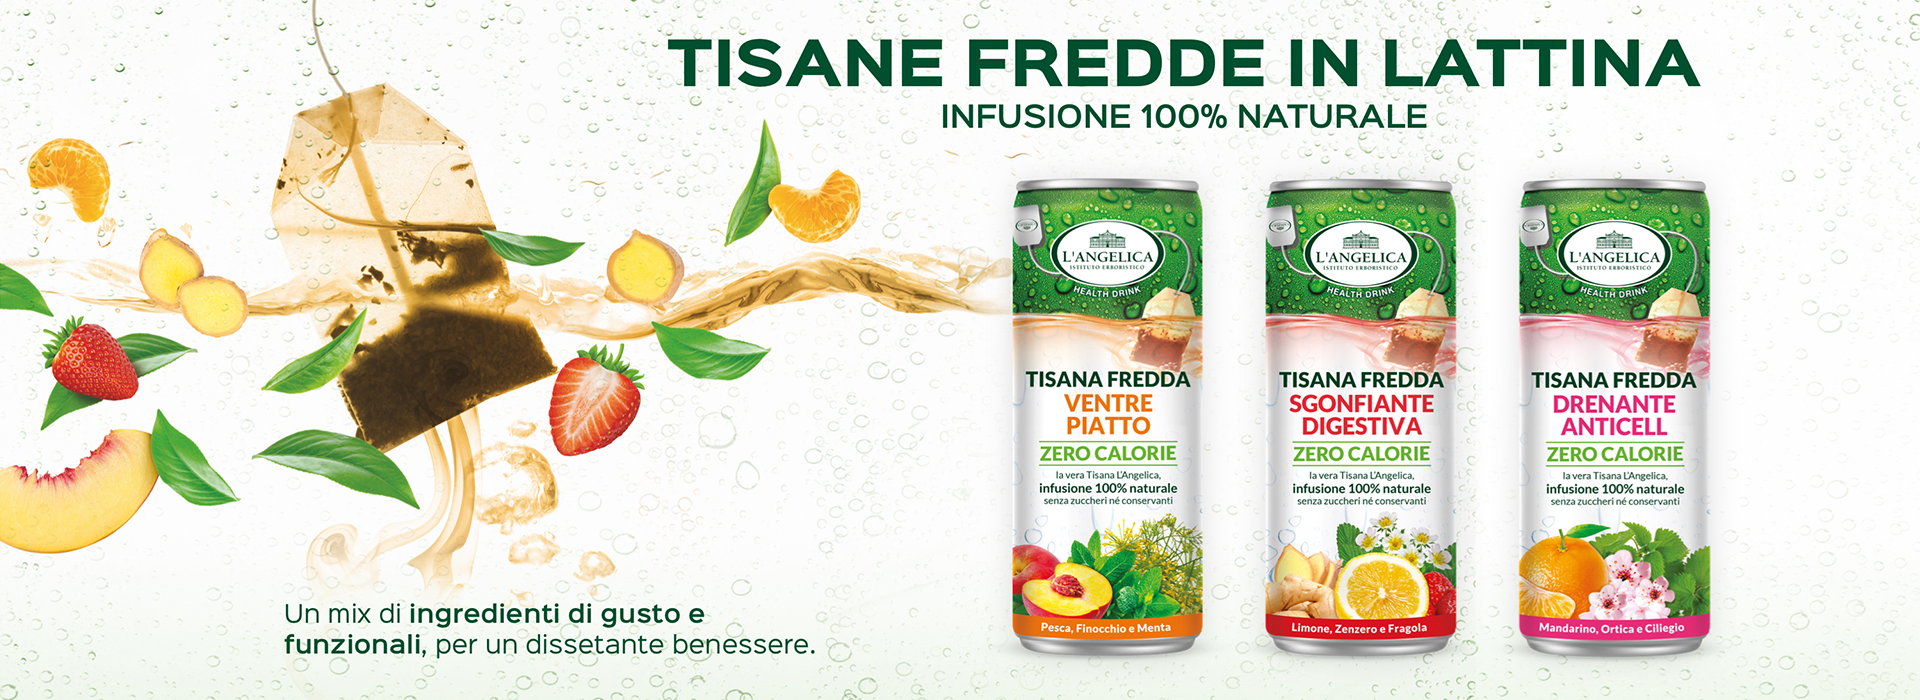 Tisane in Lattina L'Angelica - Tisane Fredde Naturali Senza Zuccheri